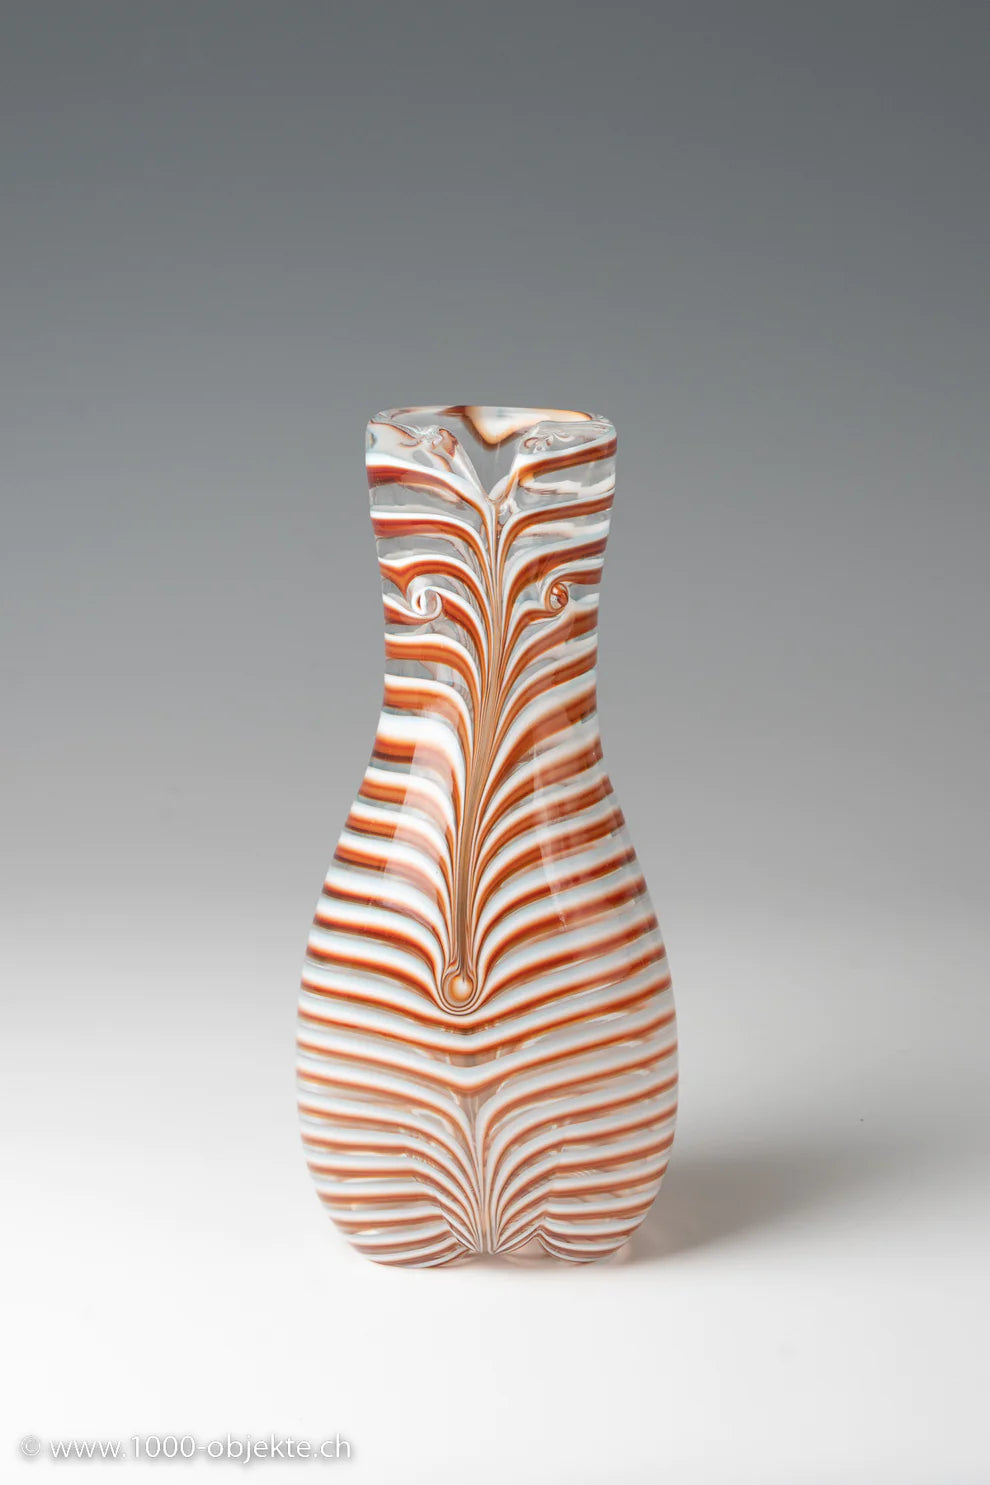 rare vase from 'Bikini' series